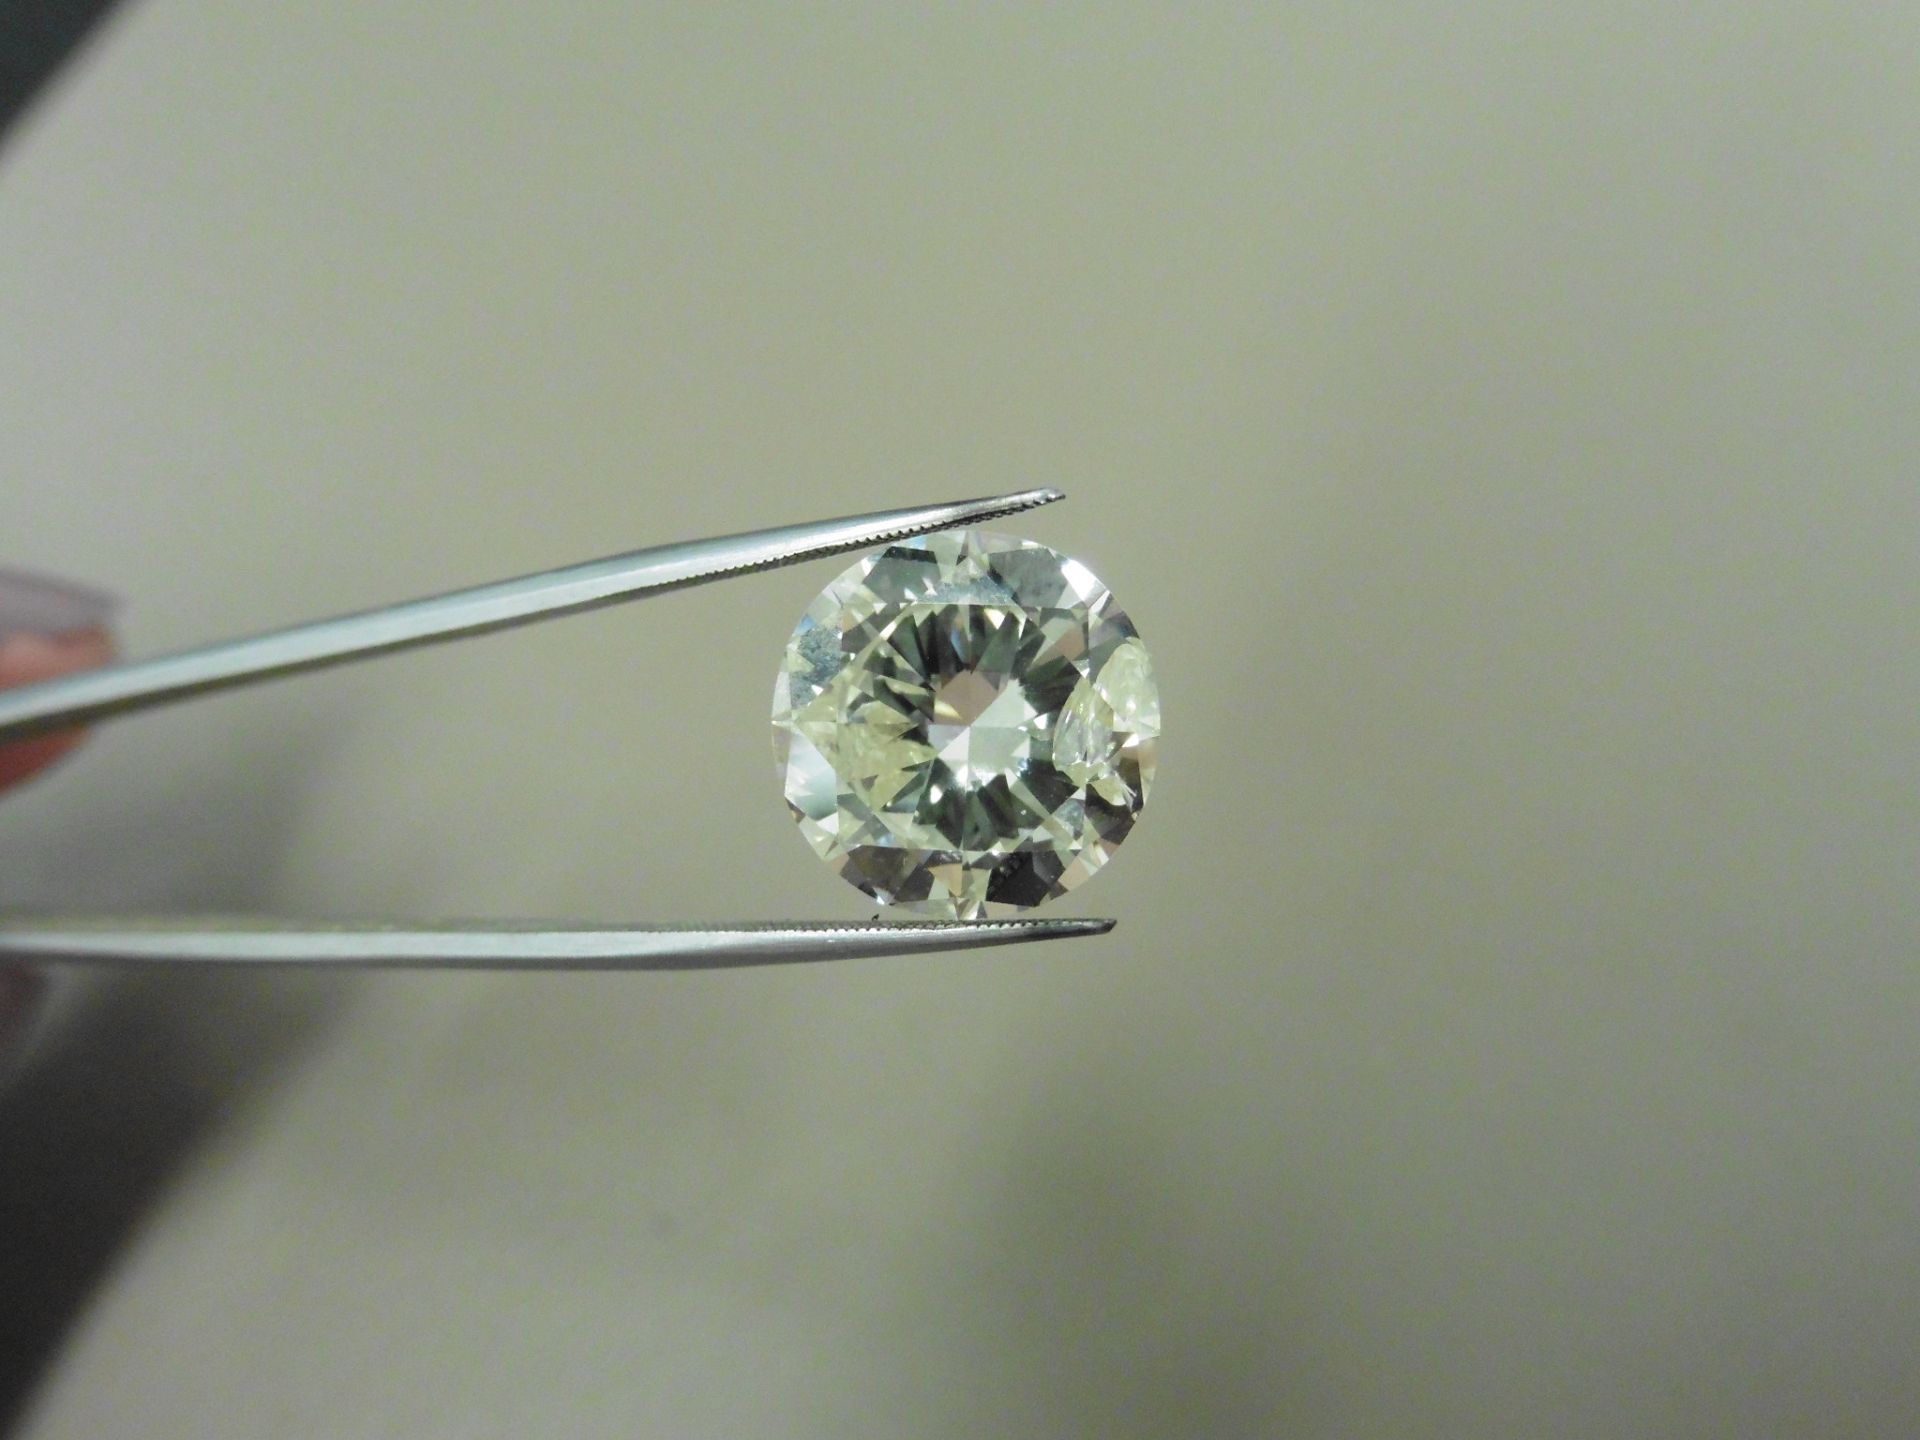 6.38ct natural loose brilliant cut diamond. K colourand I1 clarity. EGL certification. Valued at £ - Bild 5 aus 5